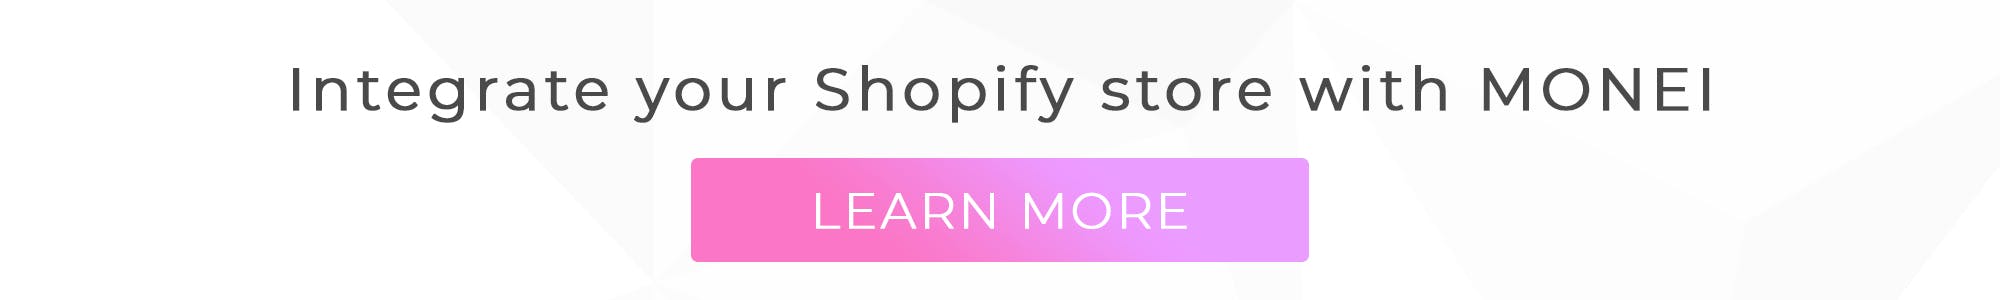 MONEI Shopify integration